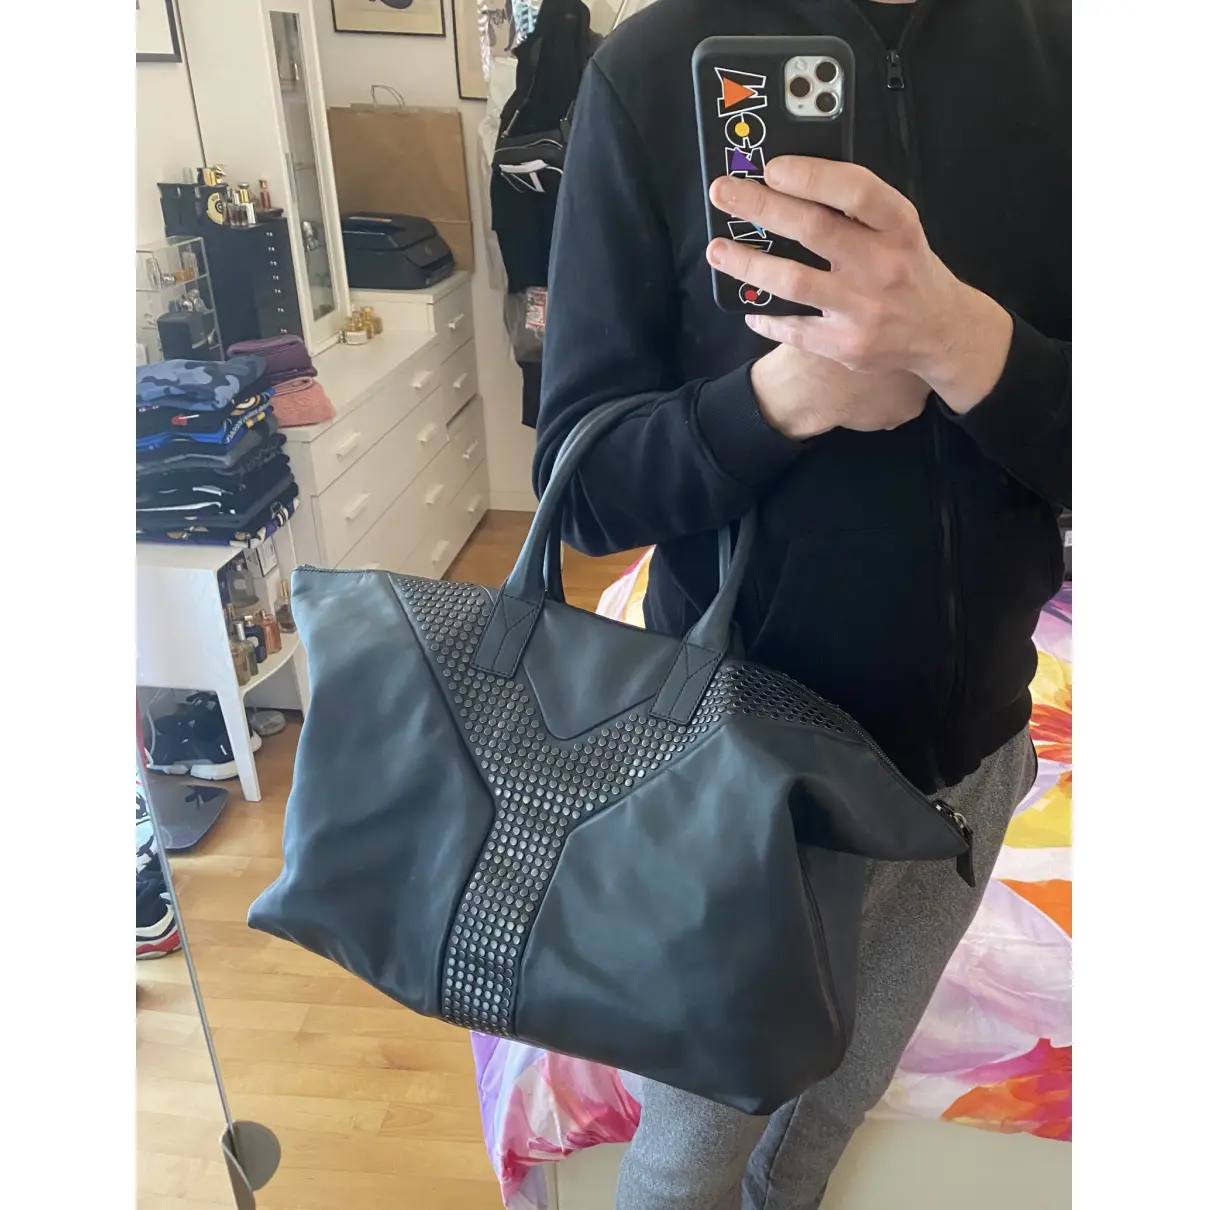 Easy leather 48h bag Yves Saint Laurent